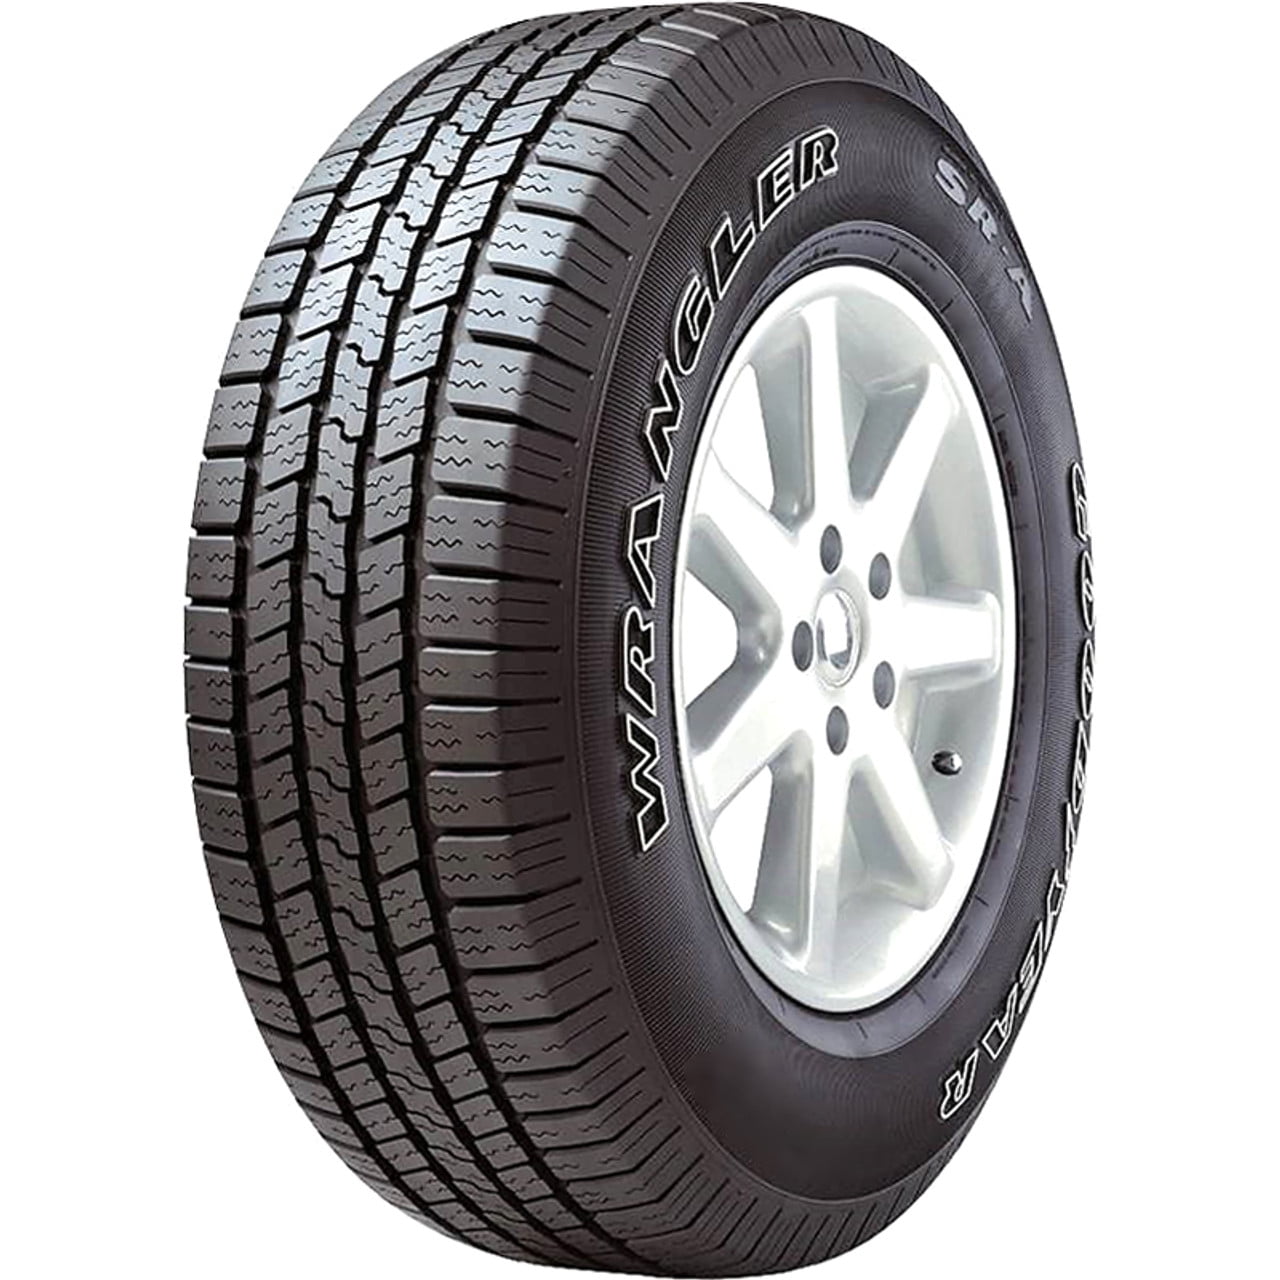 2 New Goodyear Wrangler SR A All-Season Tires - 255/75R17 113S 